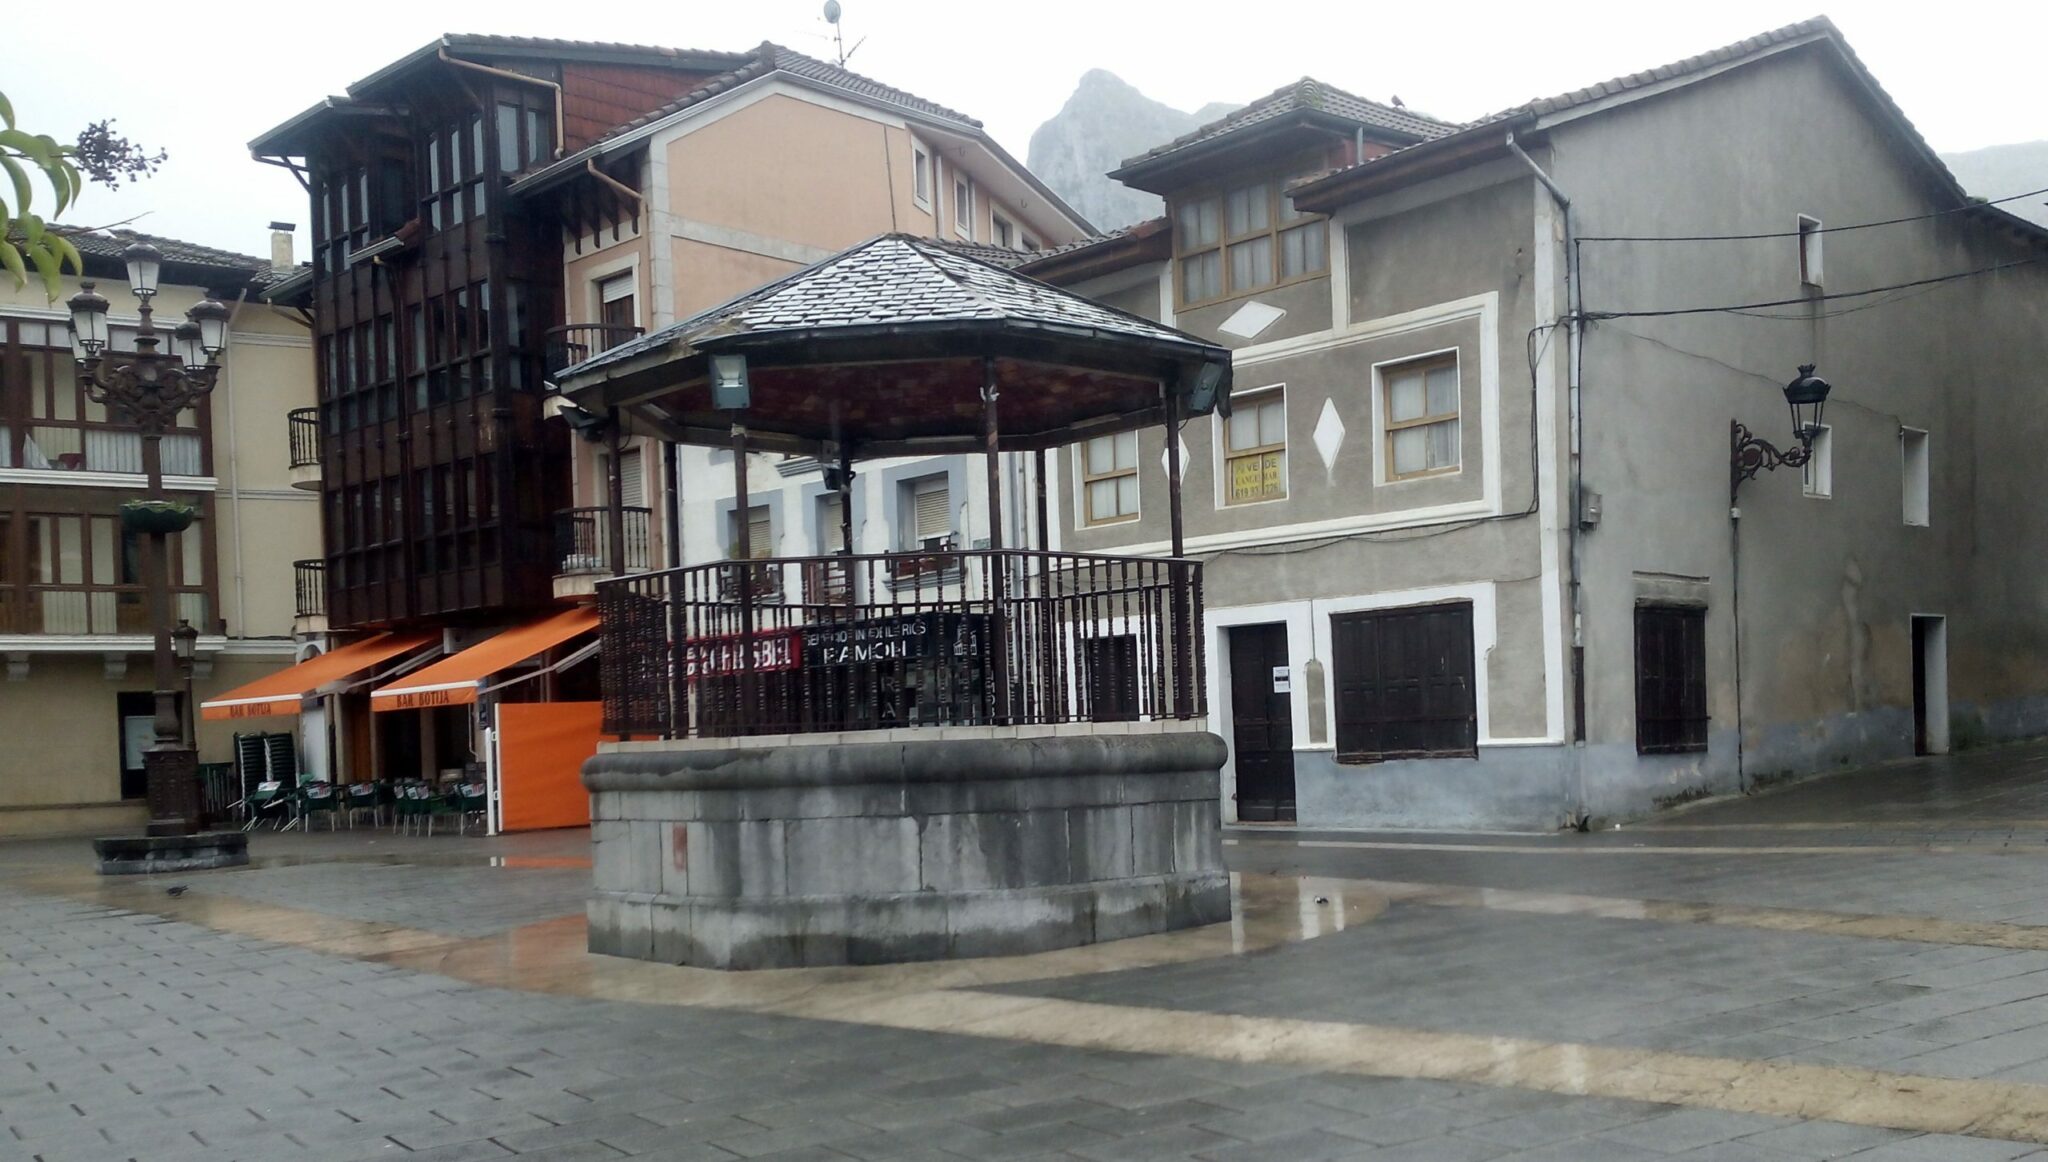 Plaza de Ramales